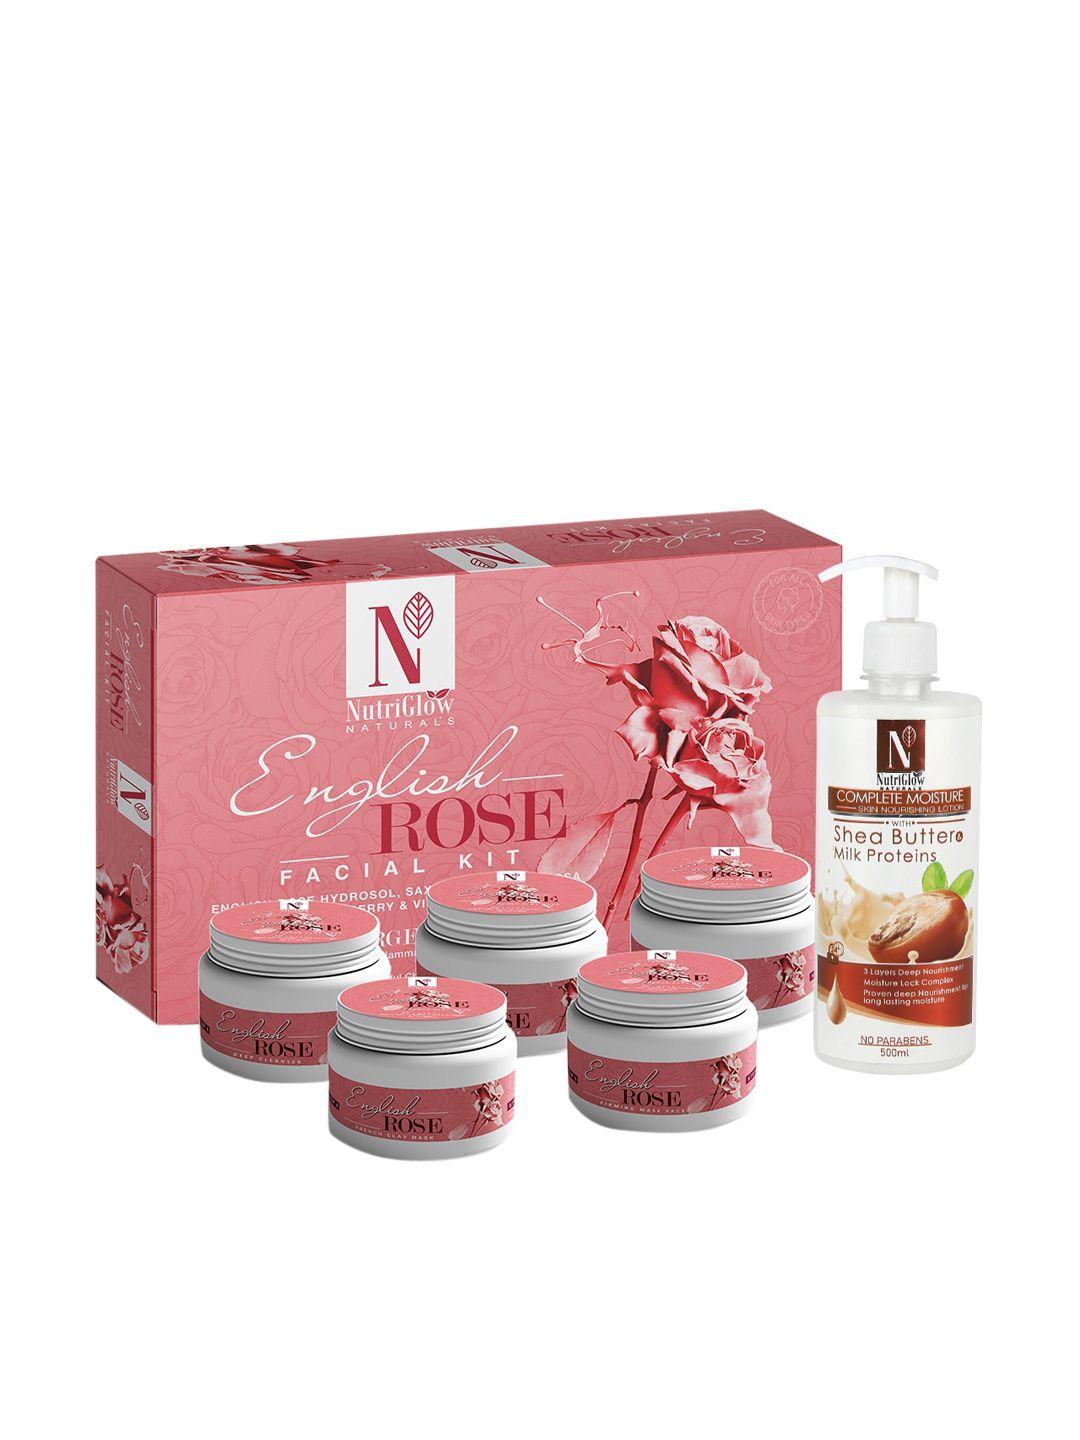 nutriglow naturals english rose facial kit 250g+10ml & shea butter body lotion 500ml